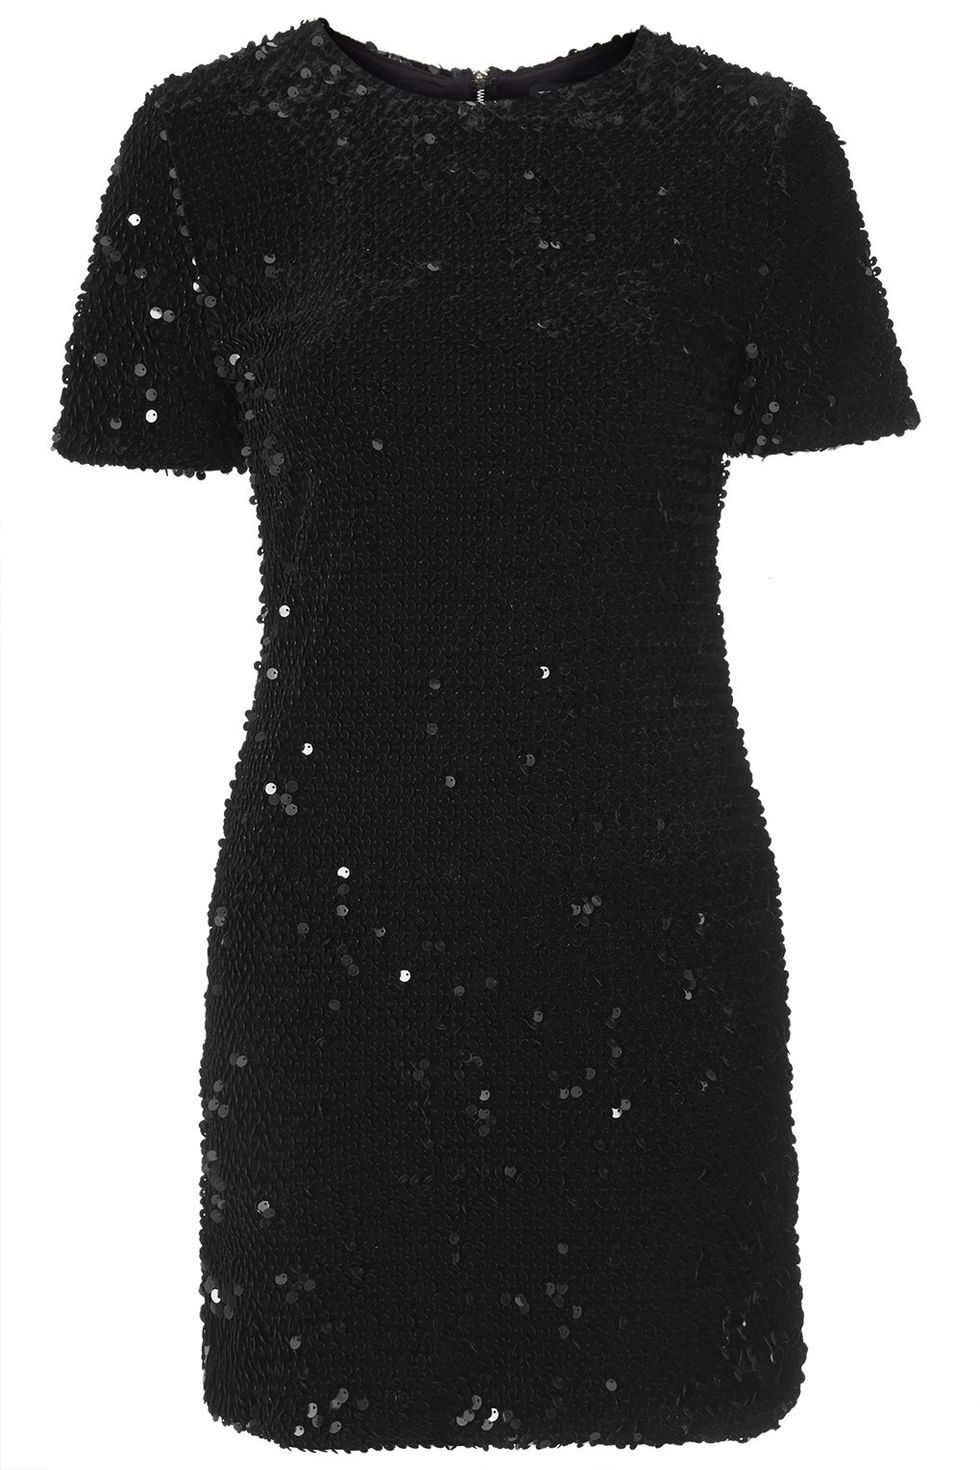 Beyonce's black sequin Topshop dress